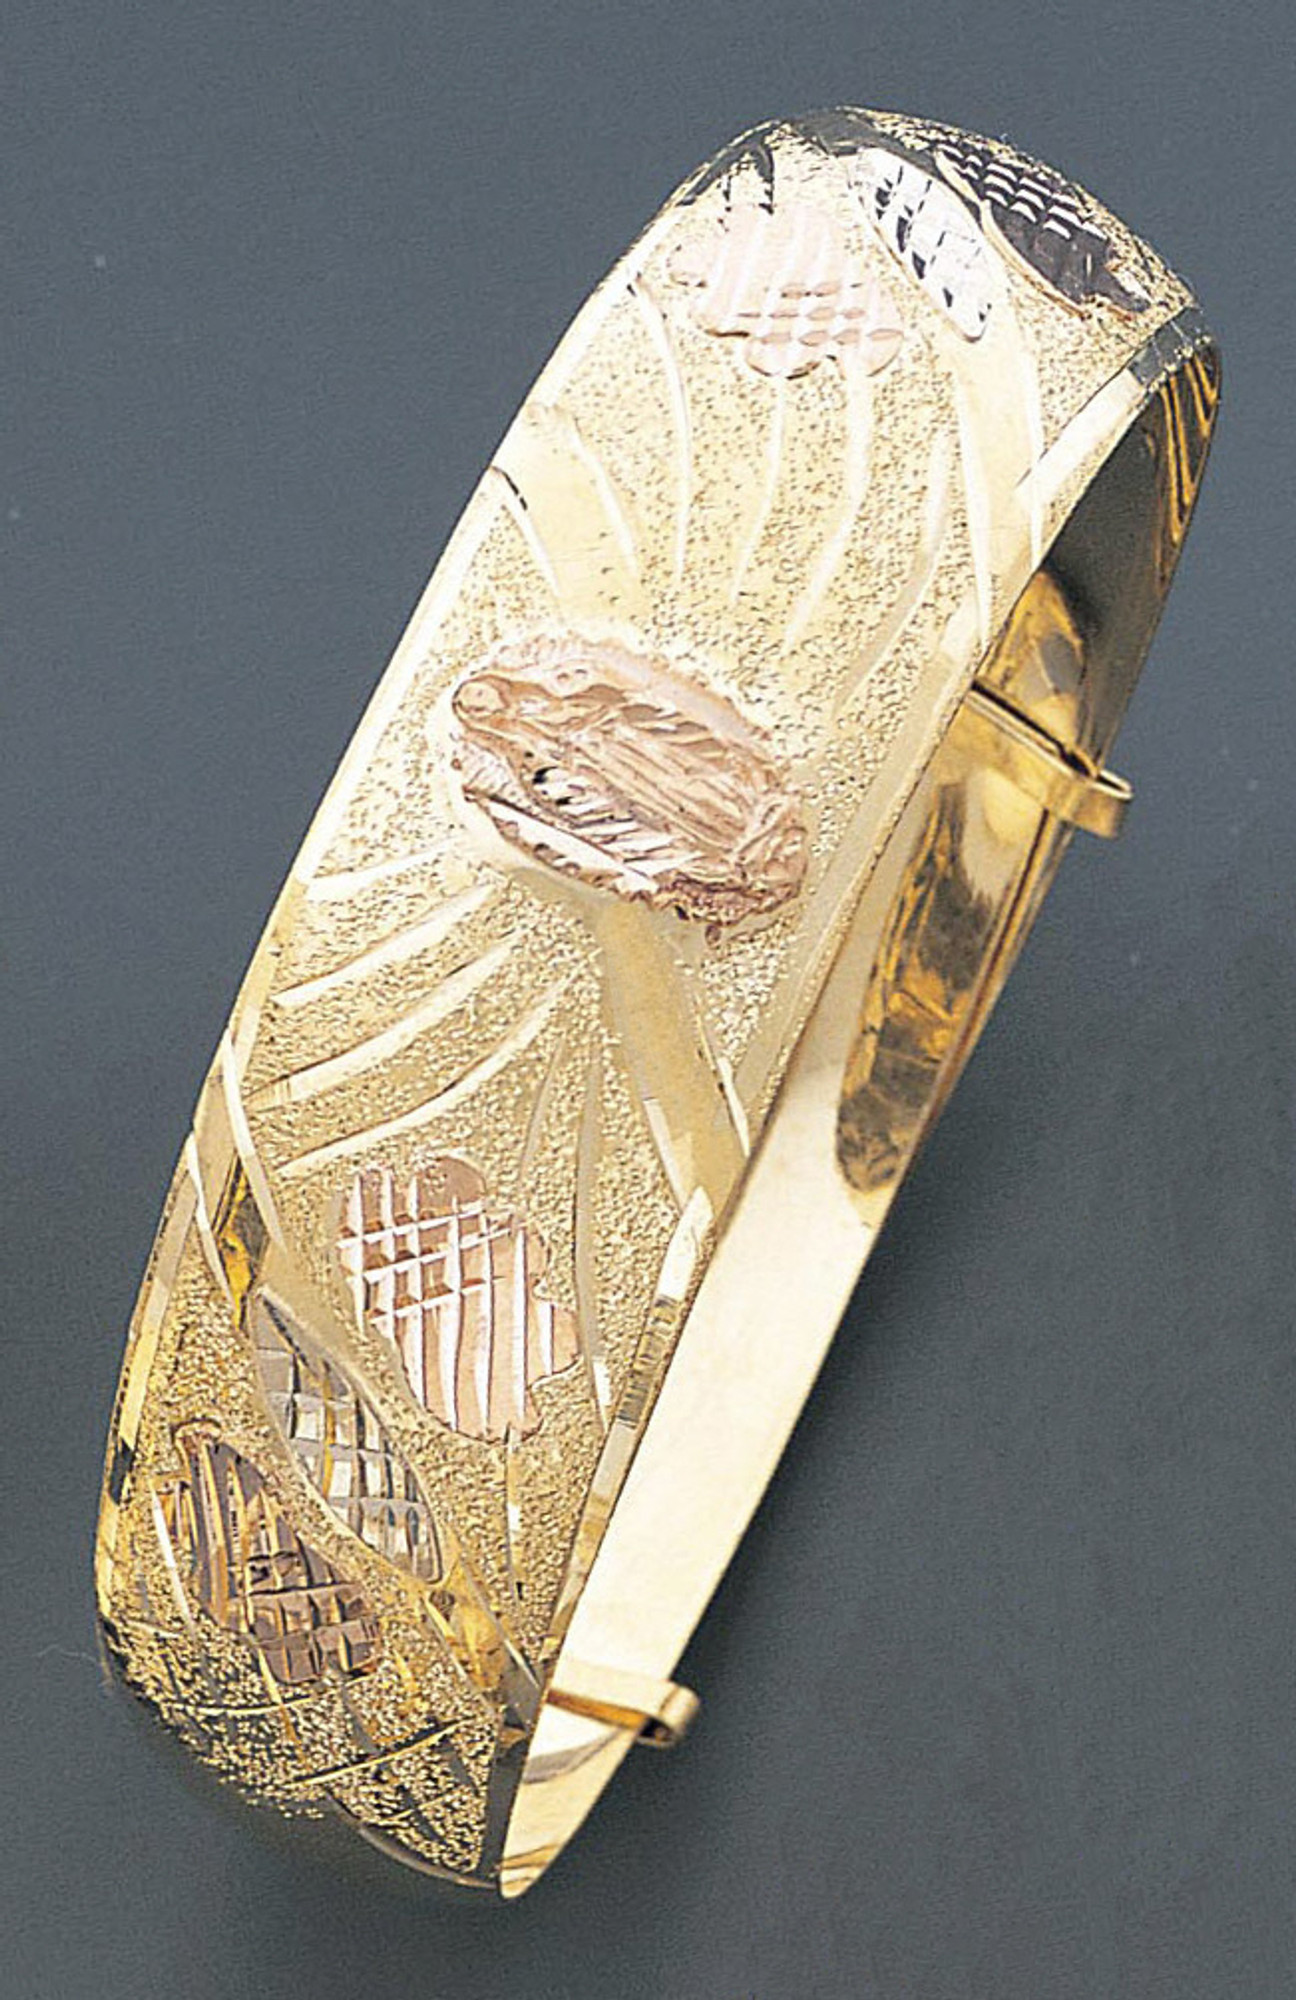 7-Piece Bohemia Burnished Gold Jewelry Bangle Bracelet Set - Walmart.com